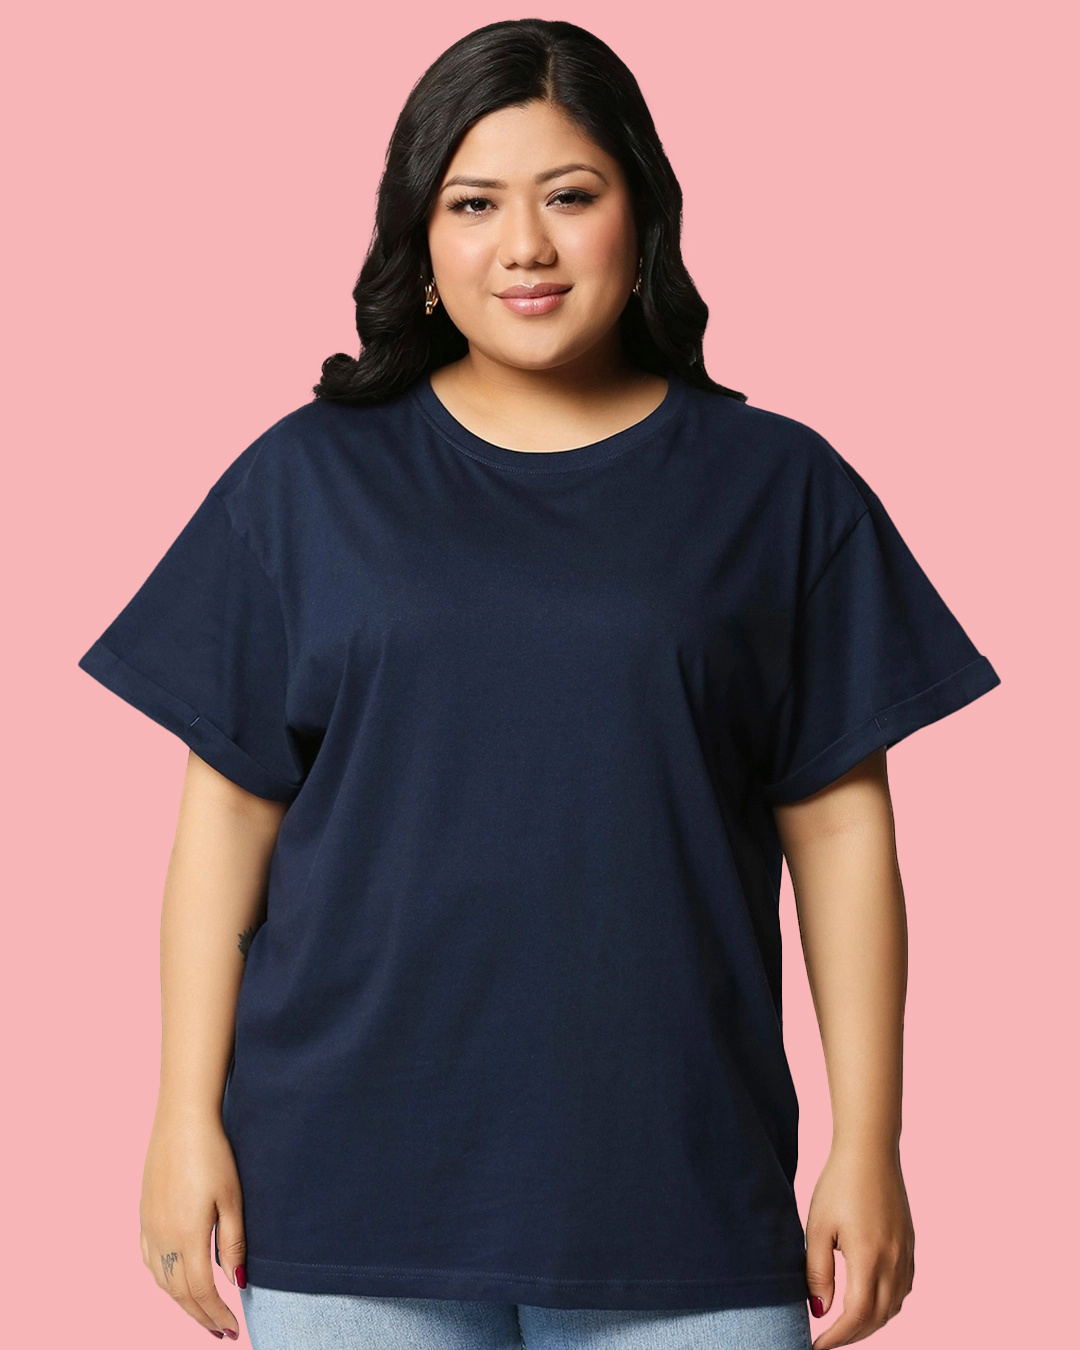 Buy Women's Navy Blue Plus Size Boyfriend T-shirt Online at Bewakoof